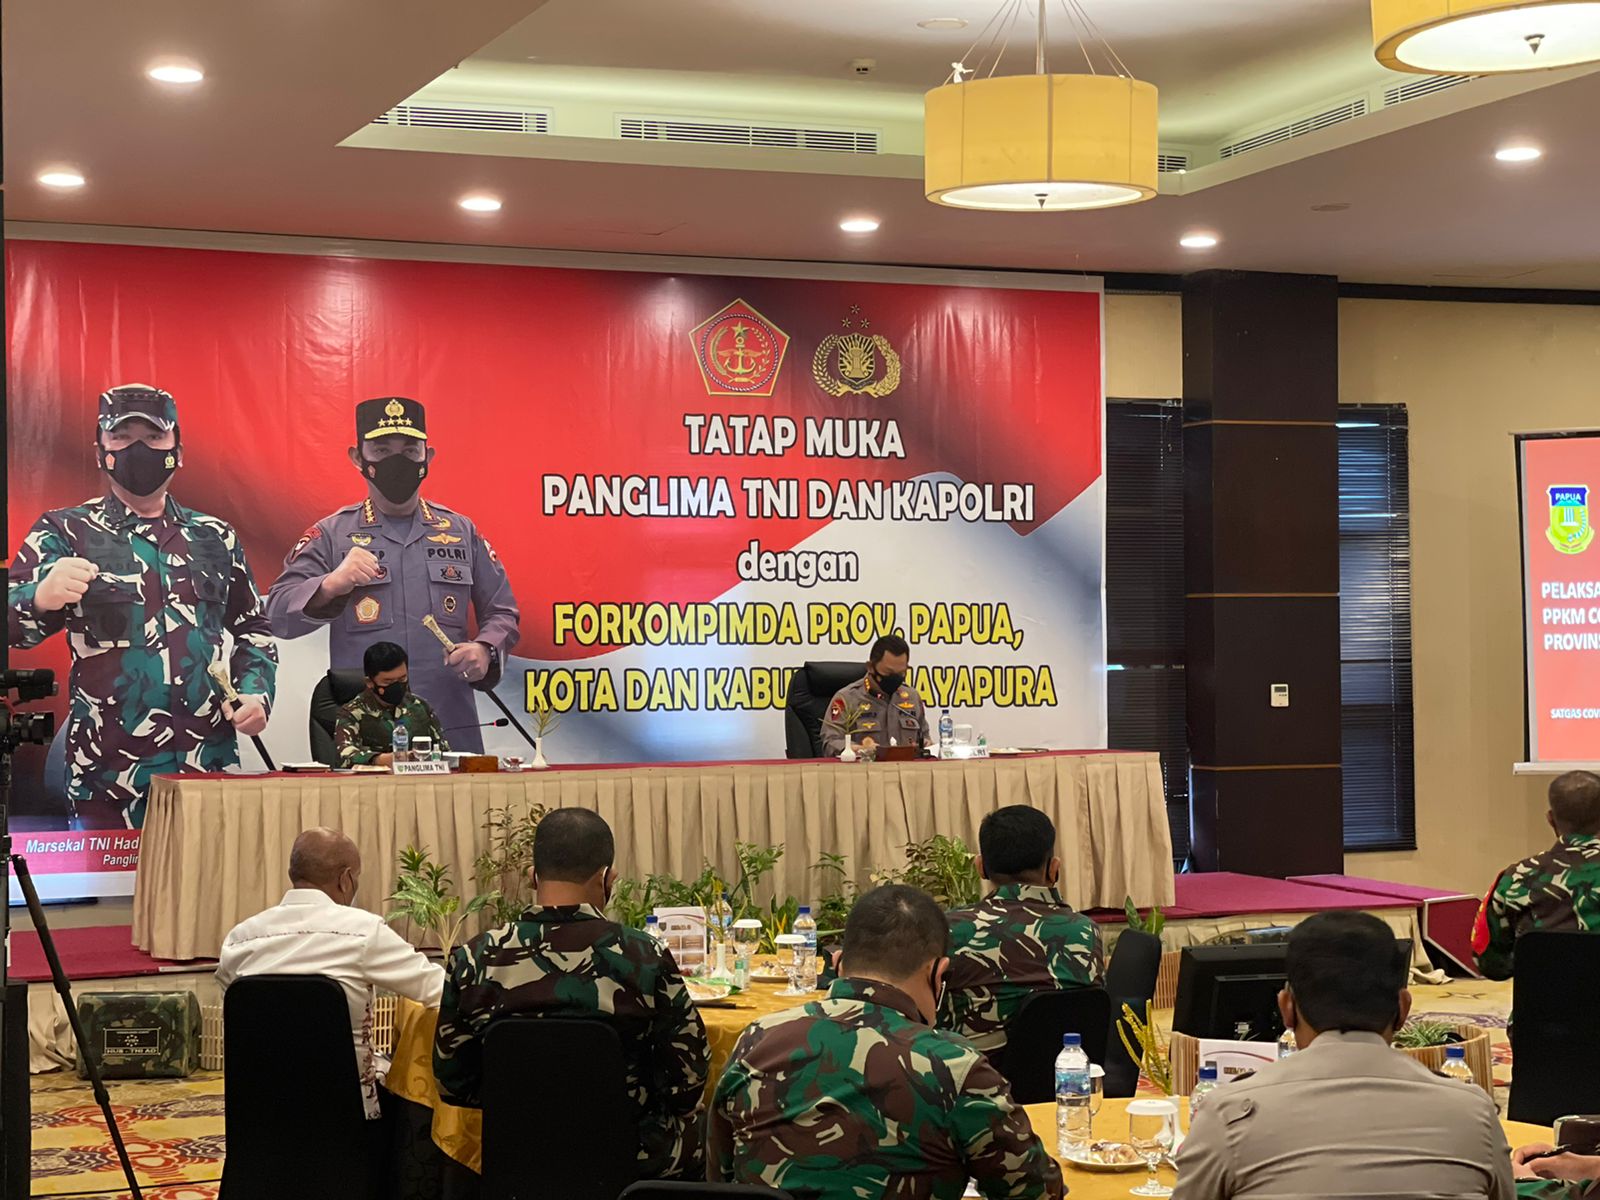 Pangkoopsau III Hadiri Acara Pertemuan Tatap Muka Panglima TNI dan Kapolri Dengan Forkompimda Papua